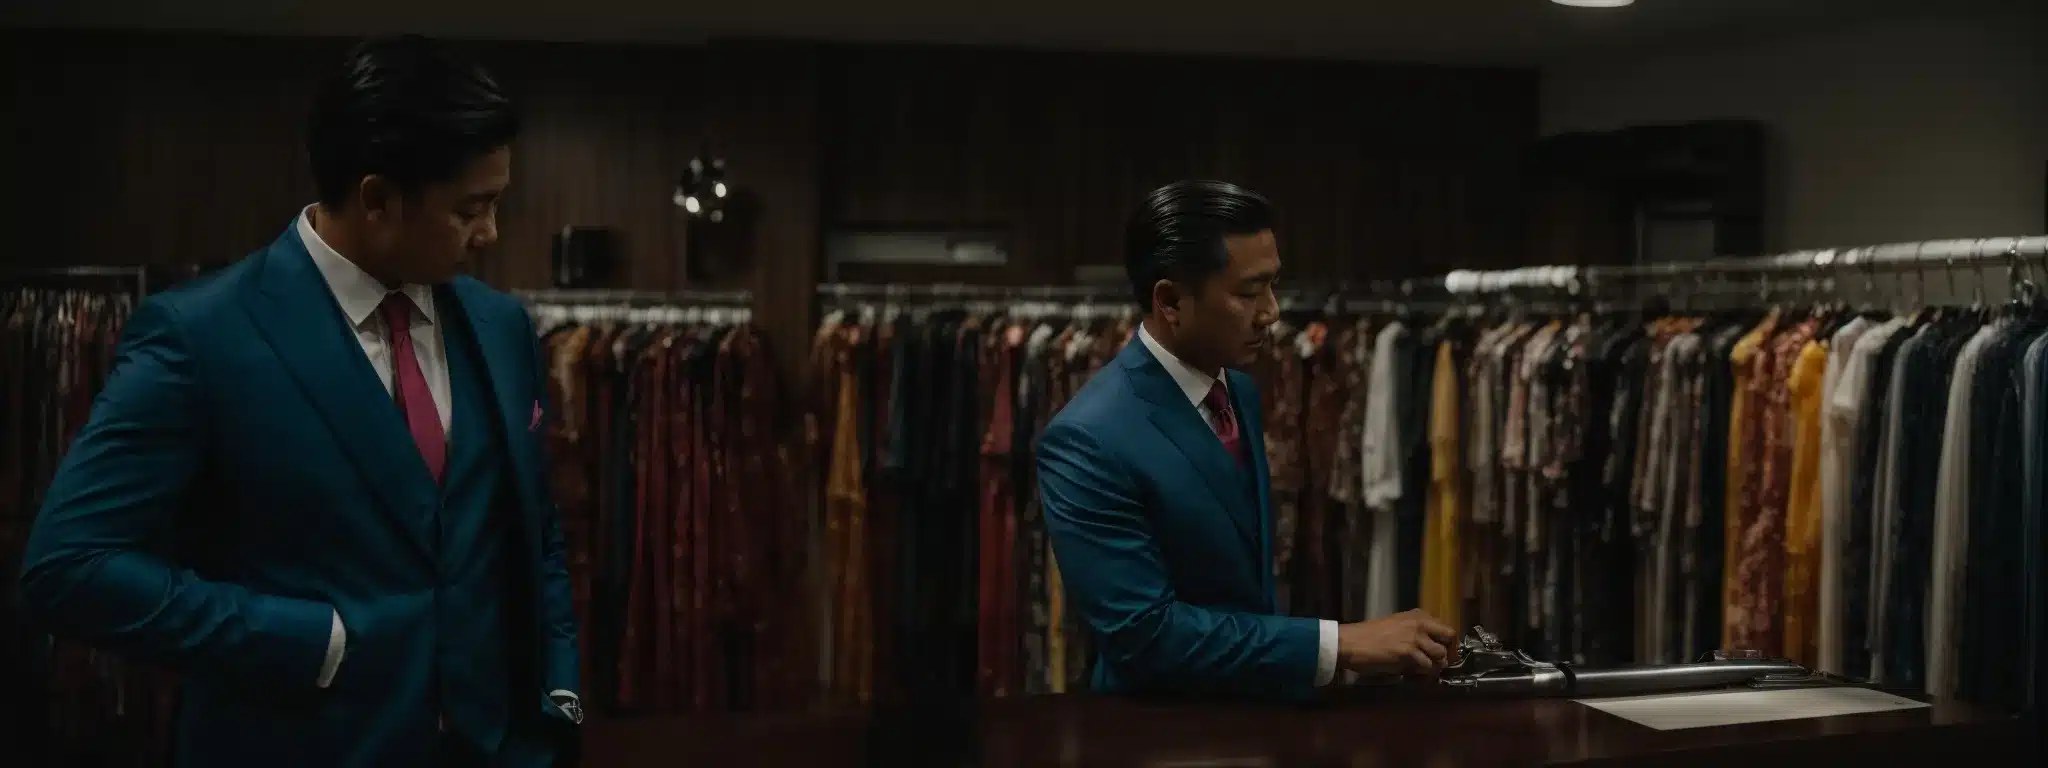 A Tailor Measuring A Vibrant, Standout Suit In An Upscale Fashion Boutique.